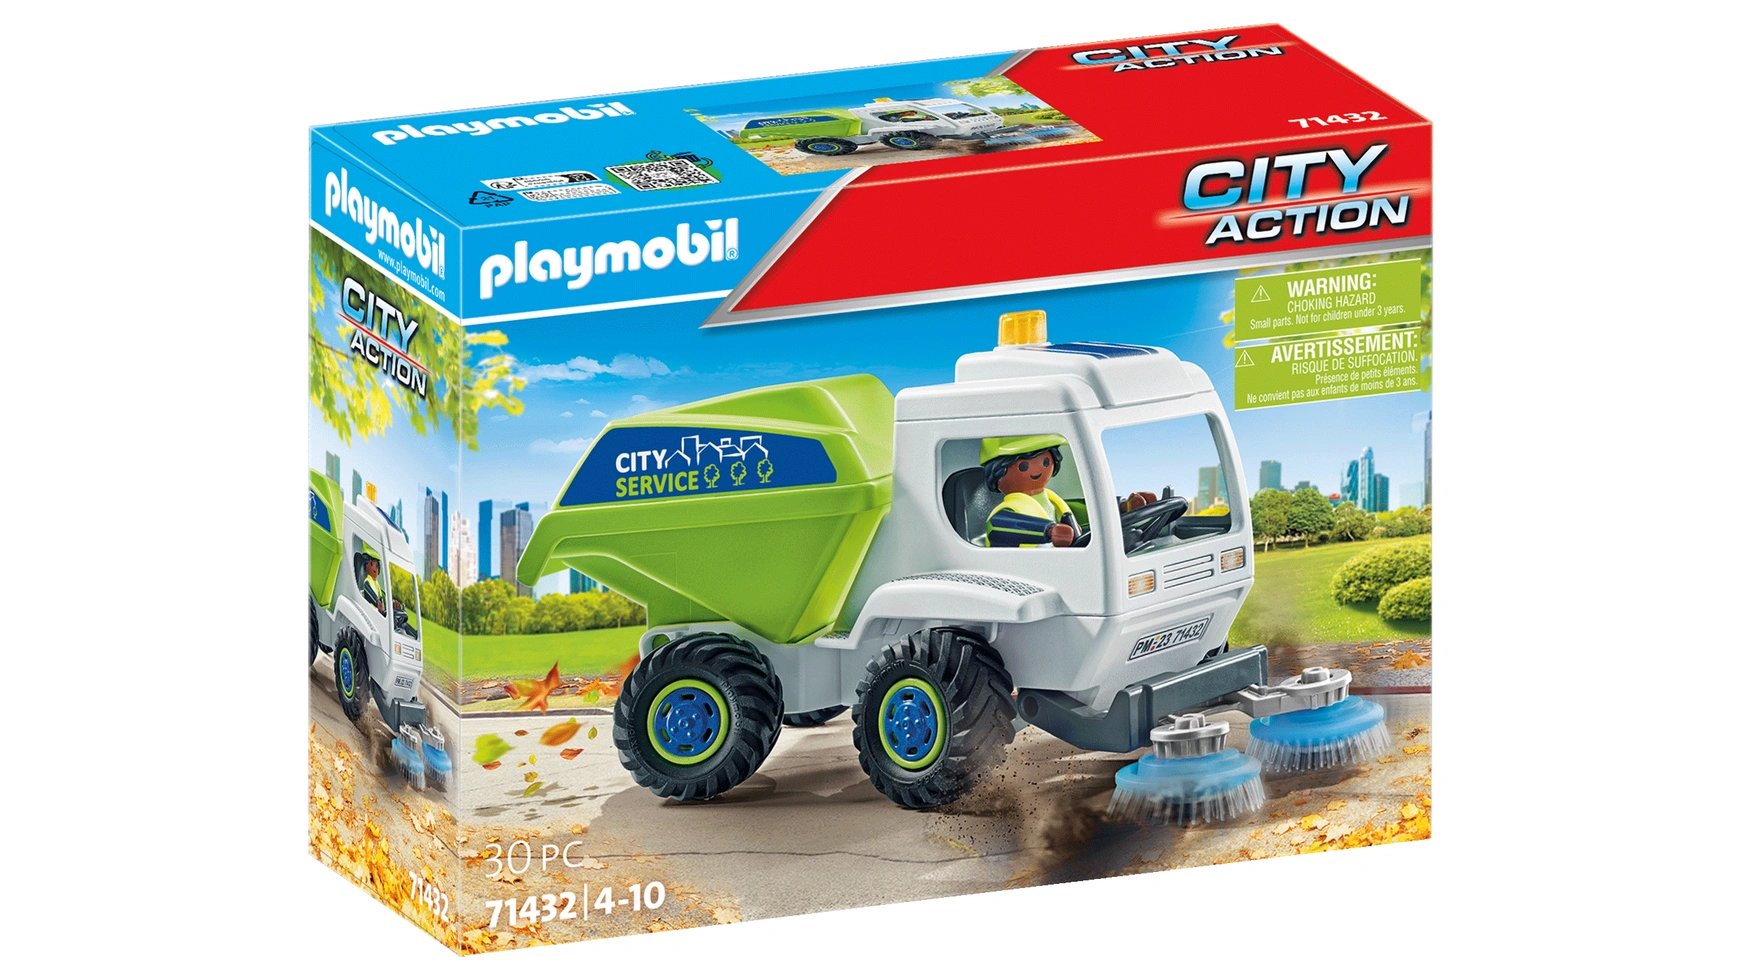 City action подметальная машина Playmobil